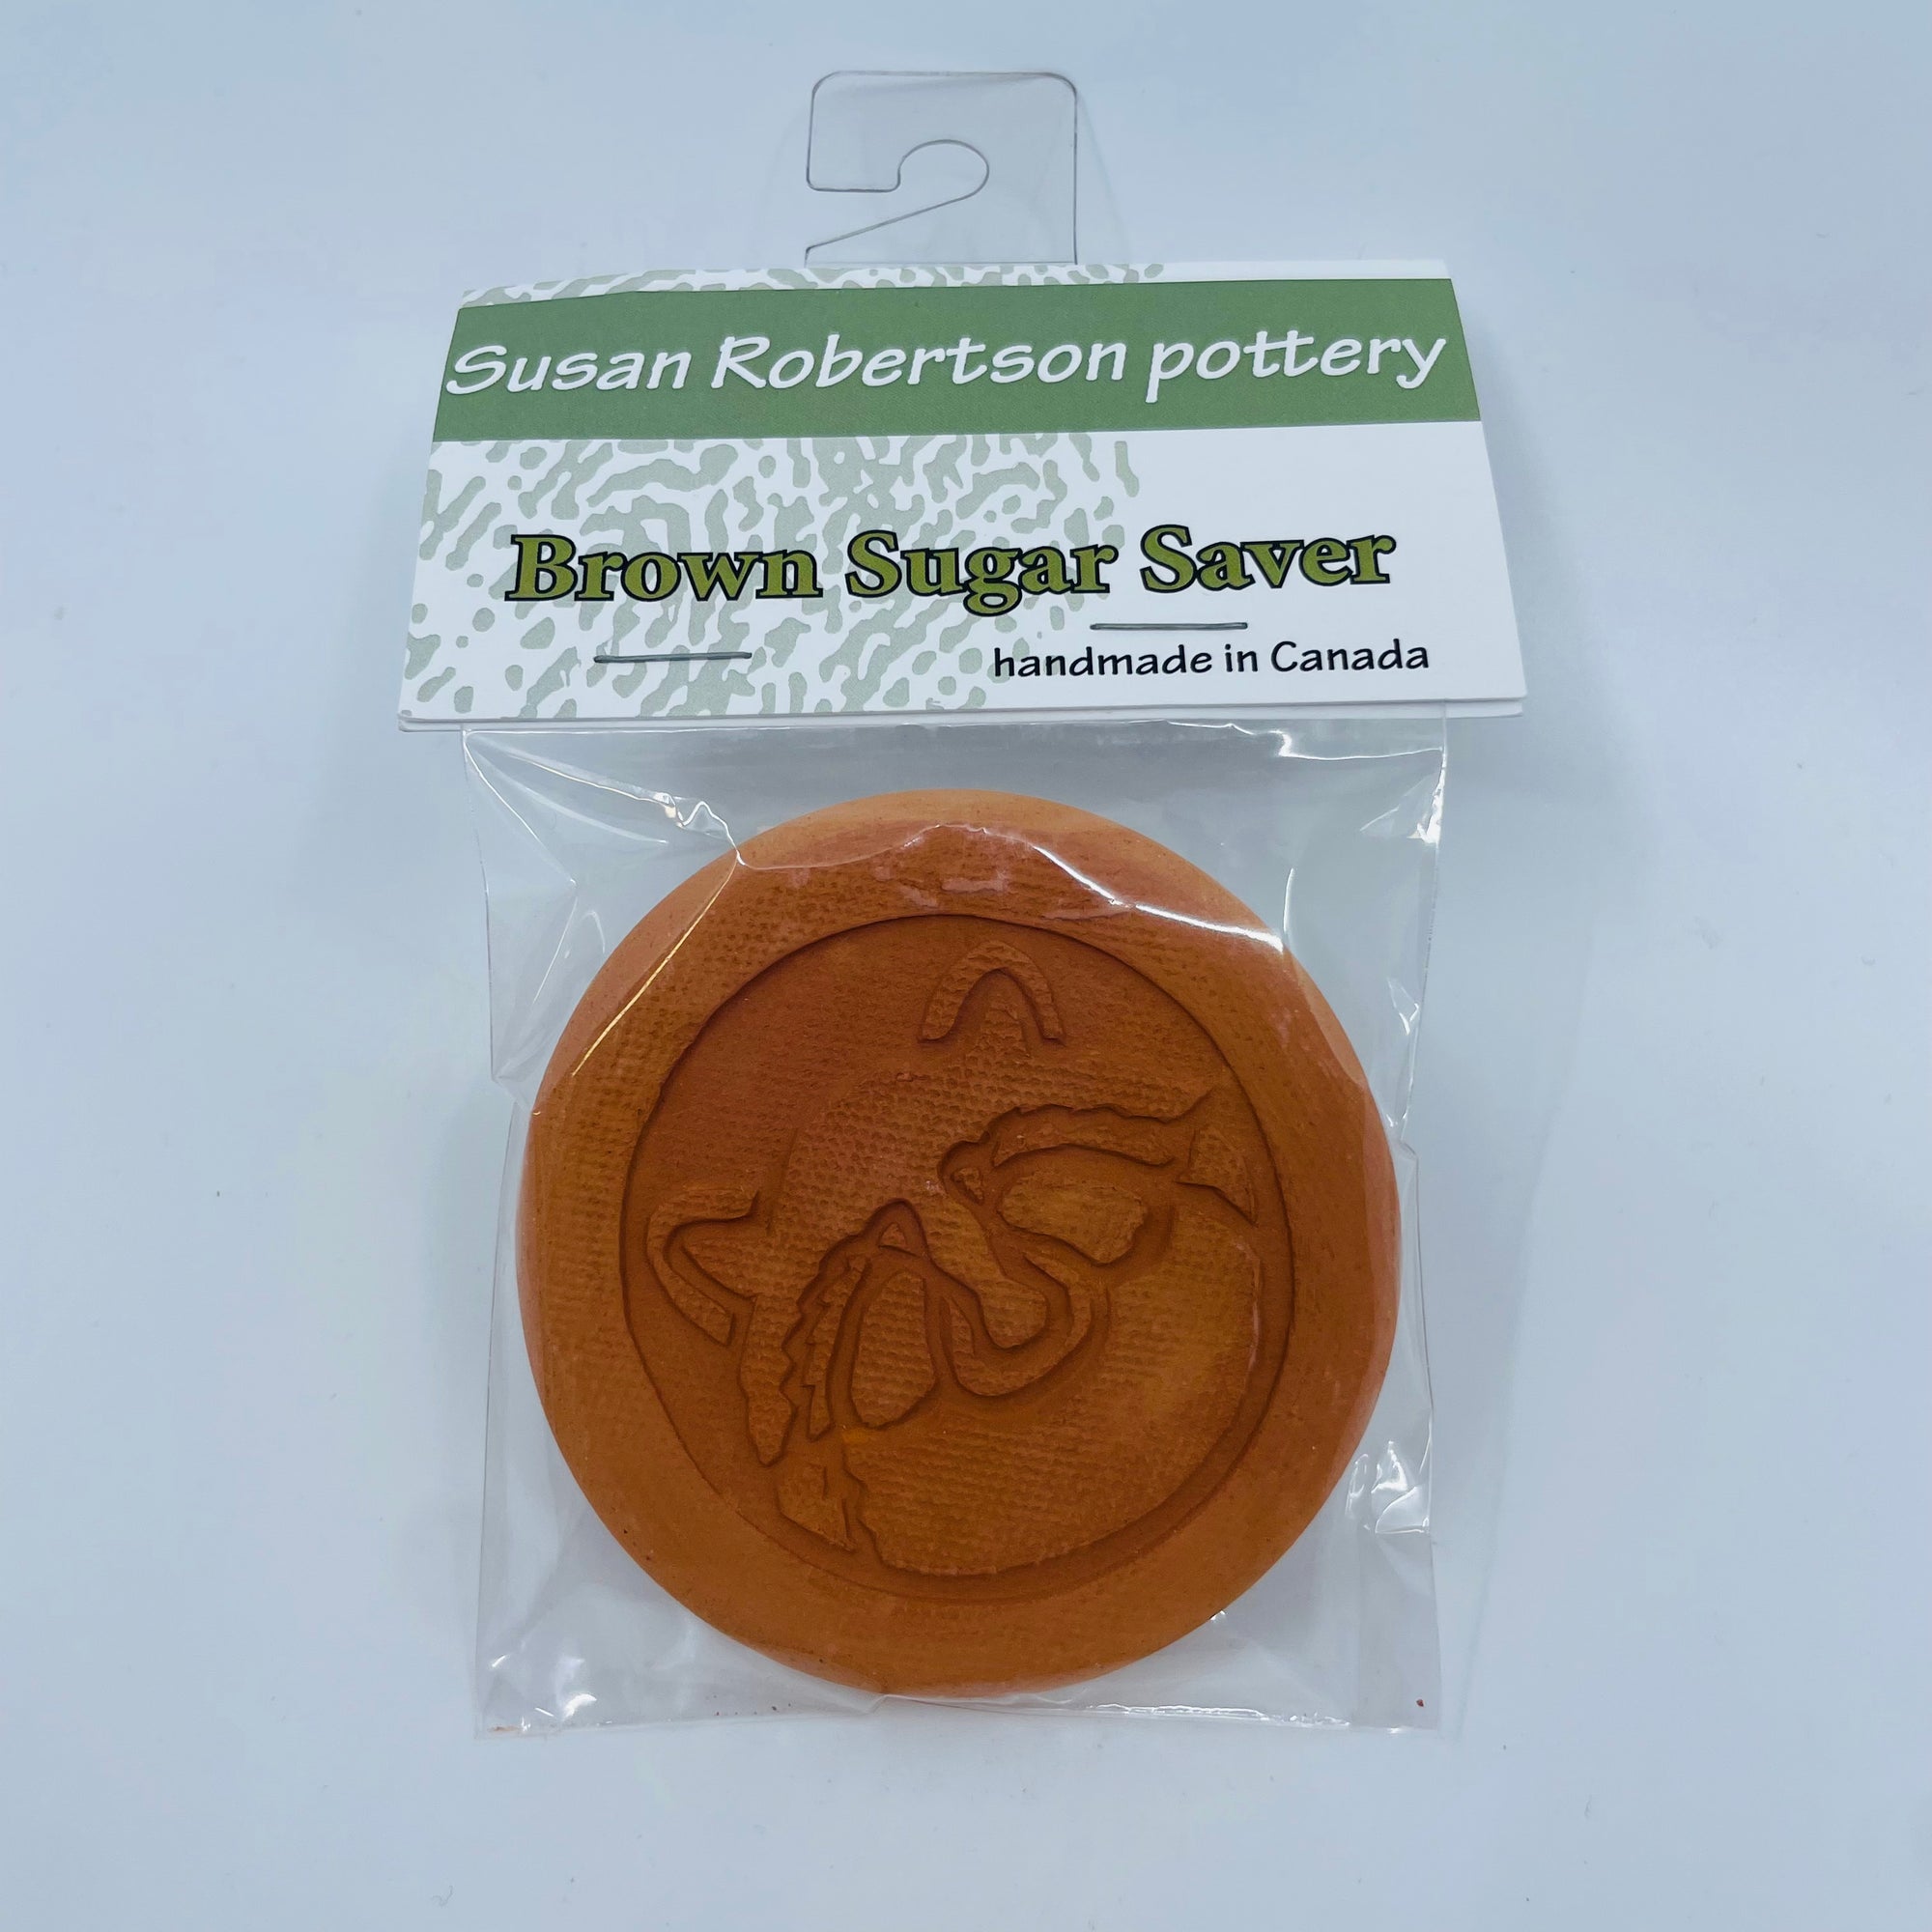 Susan Robertson Tofino Brown Sugar Saver - 5007BSSRAC (raccoon) - 5007BSSRAC - House of Himwitsa Native Art Gallery and Gifts